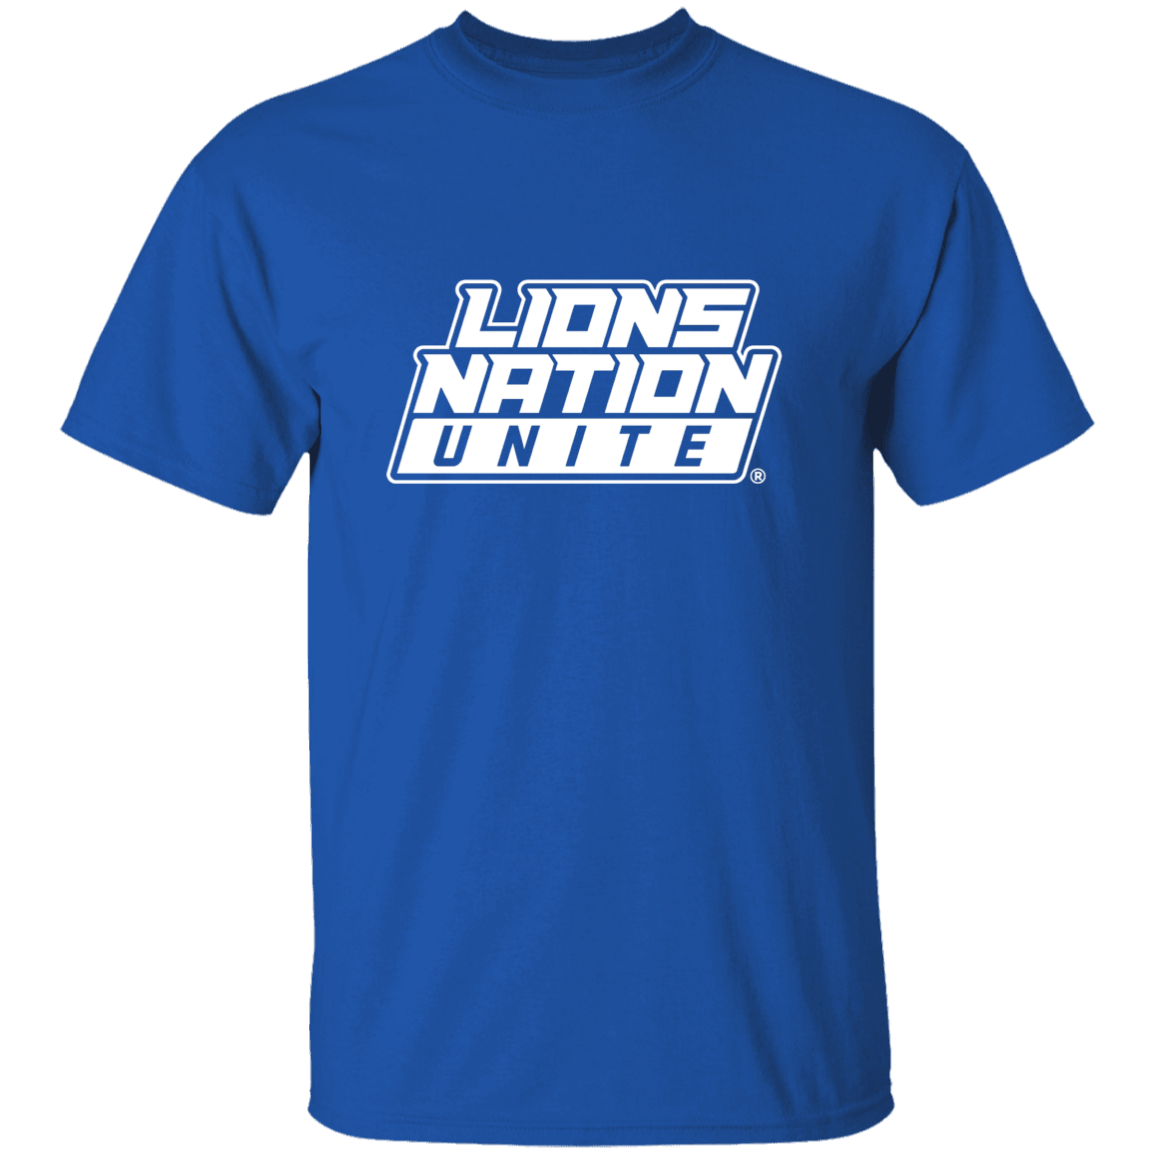 Lions Nation Unite - G500B Youth 5.3 oz 100% Cotton T-Shirt